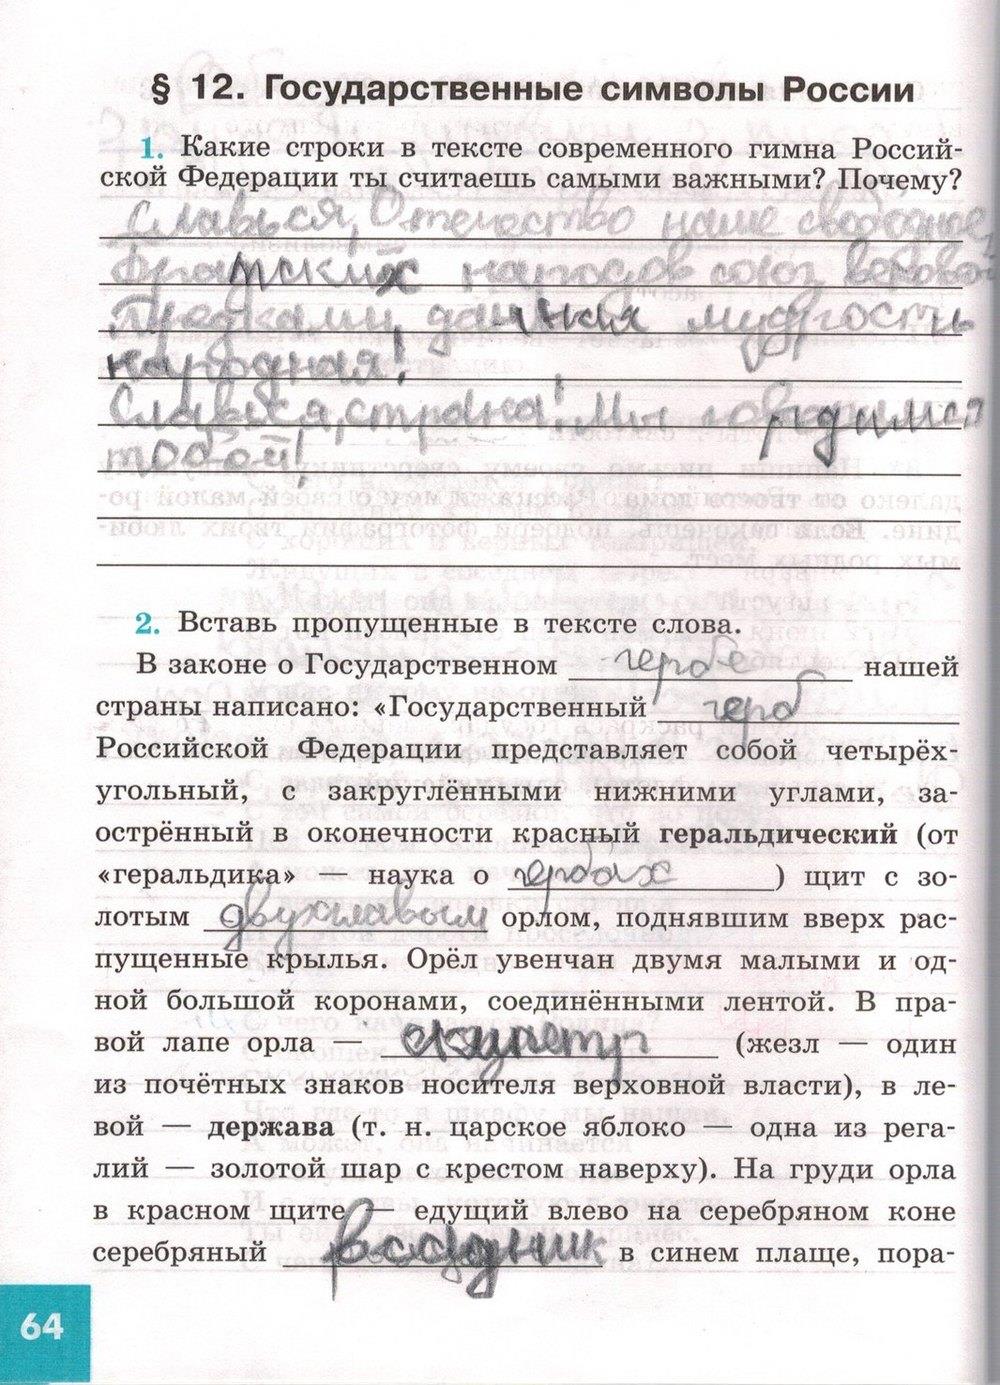 гдз 5 класс рабочая тетрадь страница 64 обществознание Иванова, Хотеенкова